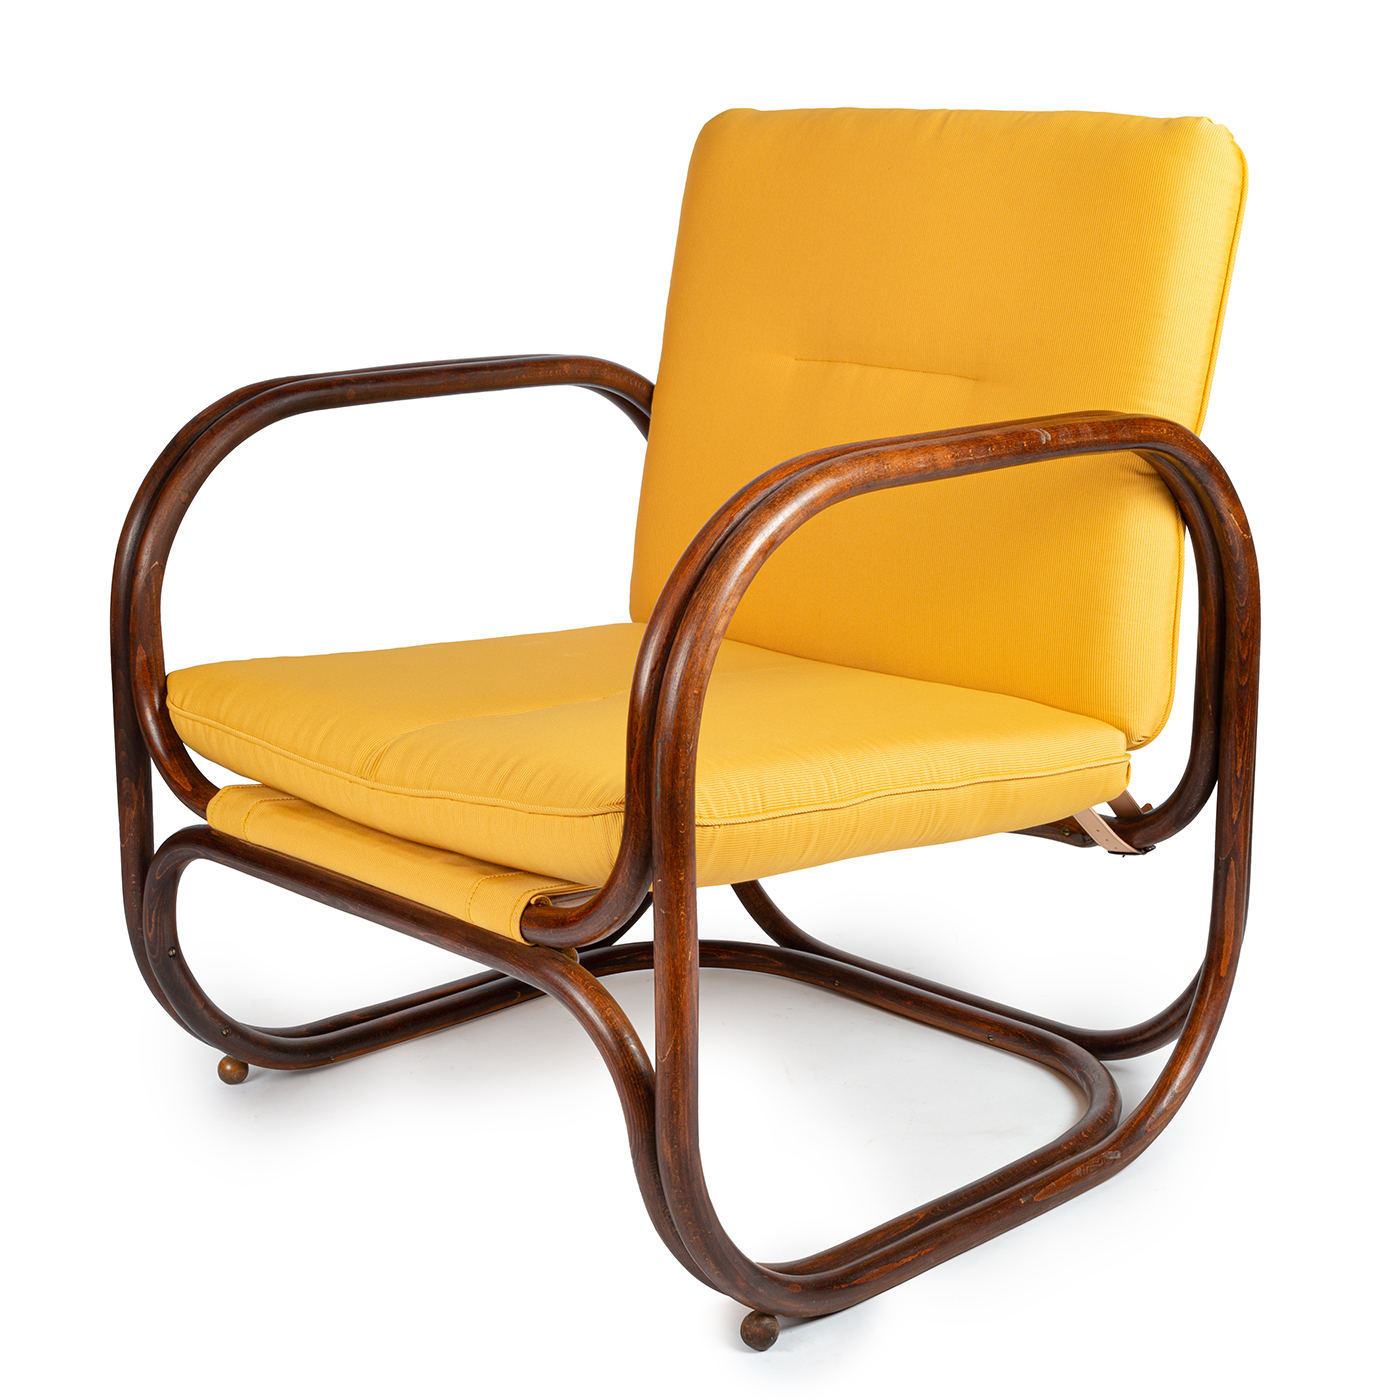 Prototype TON armchair, designed by Karel Prager